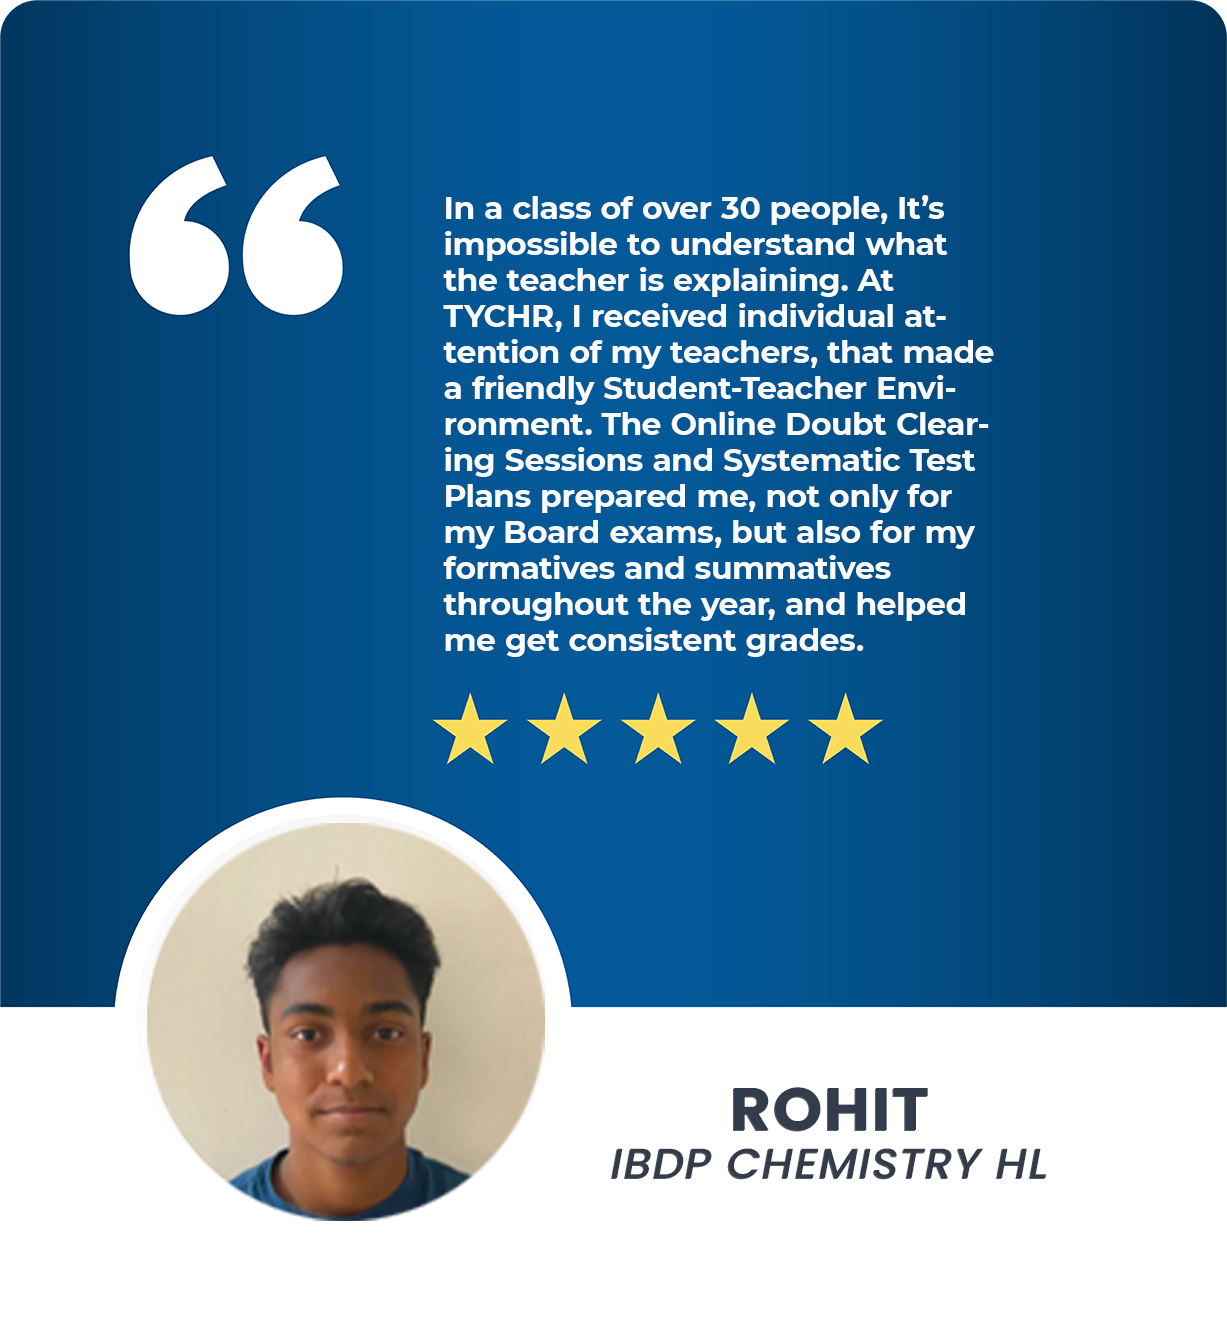 ROHIT IB CHEMISTRY HL